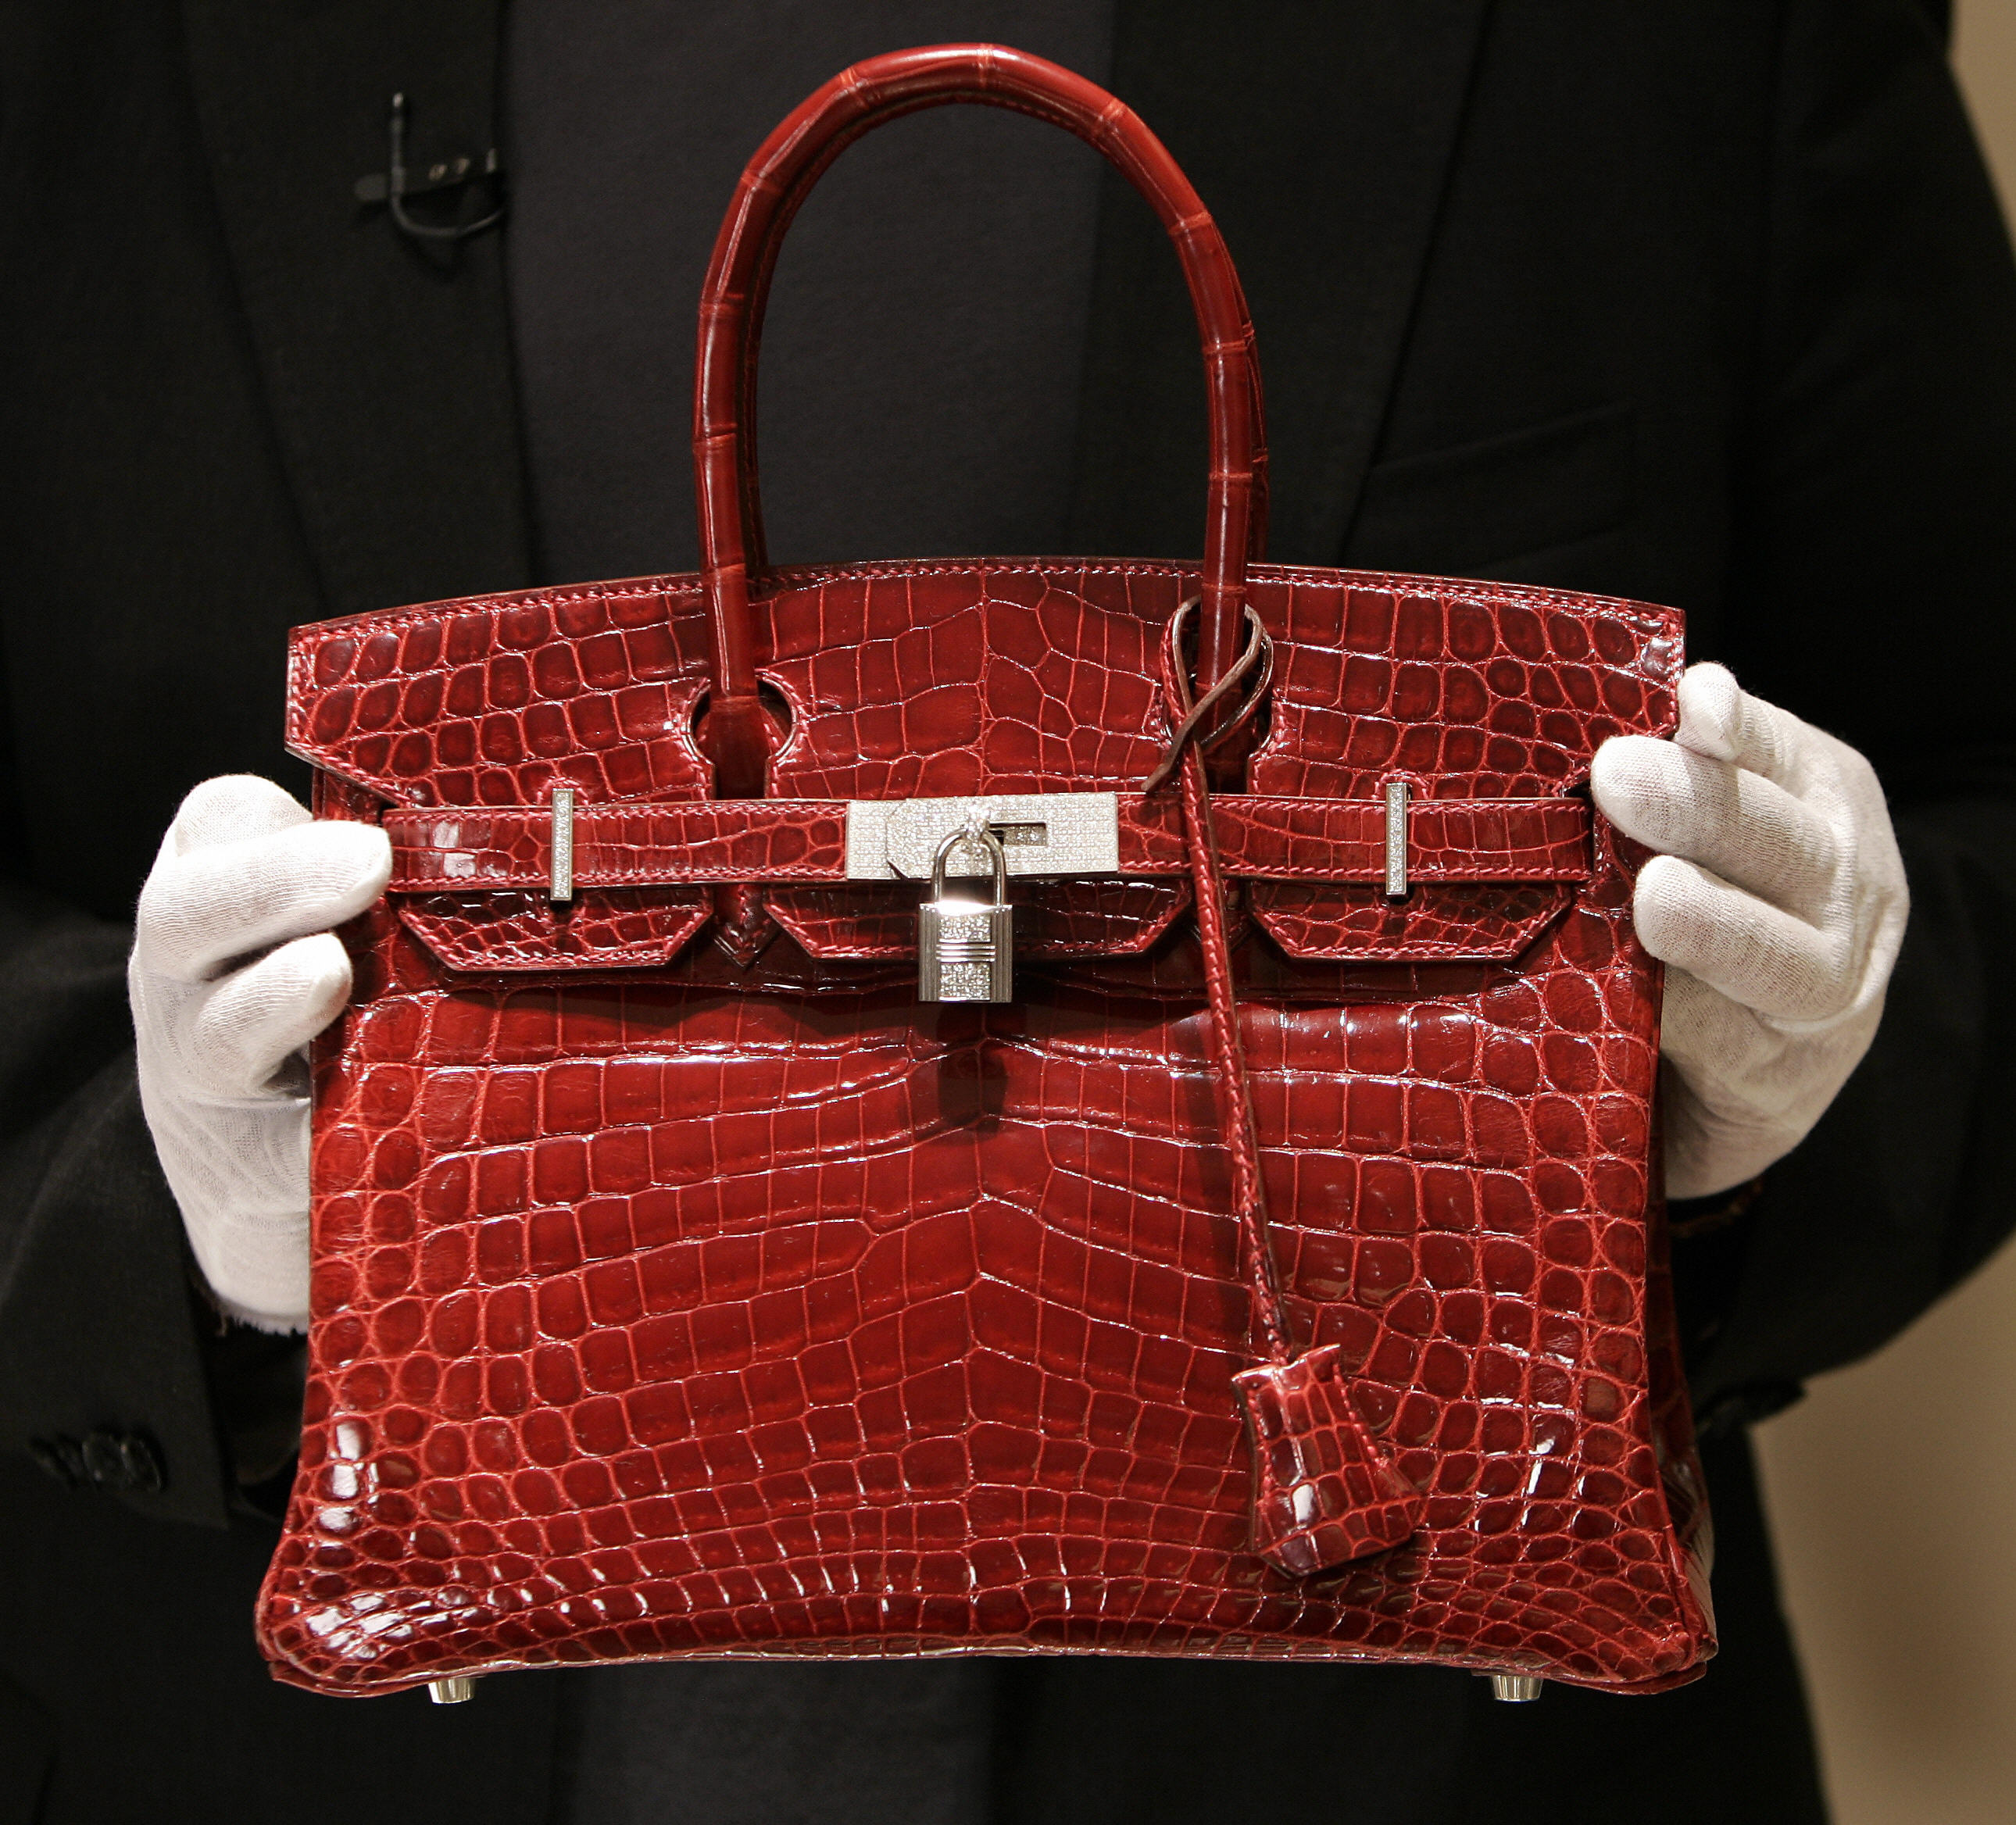 A Birkin luxury handbag sits in the window display of a Hermes